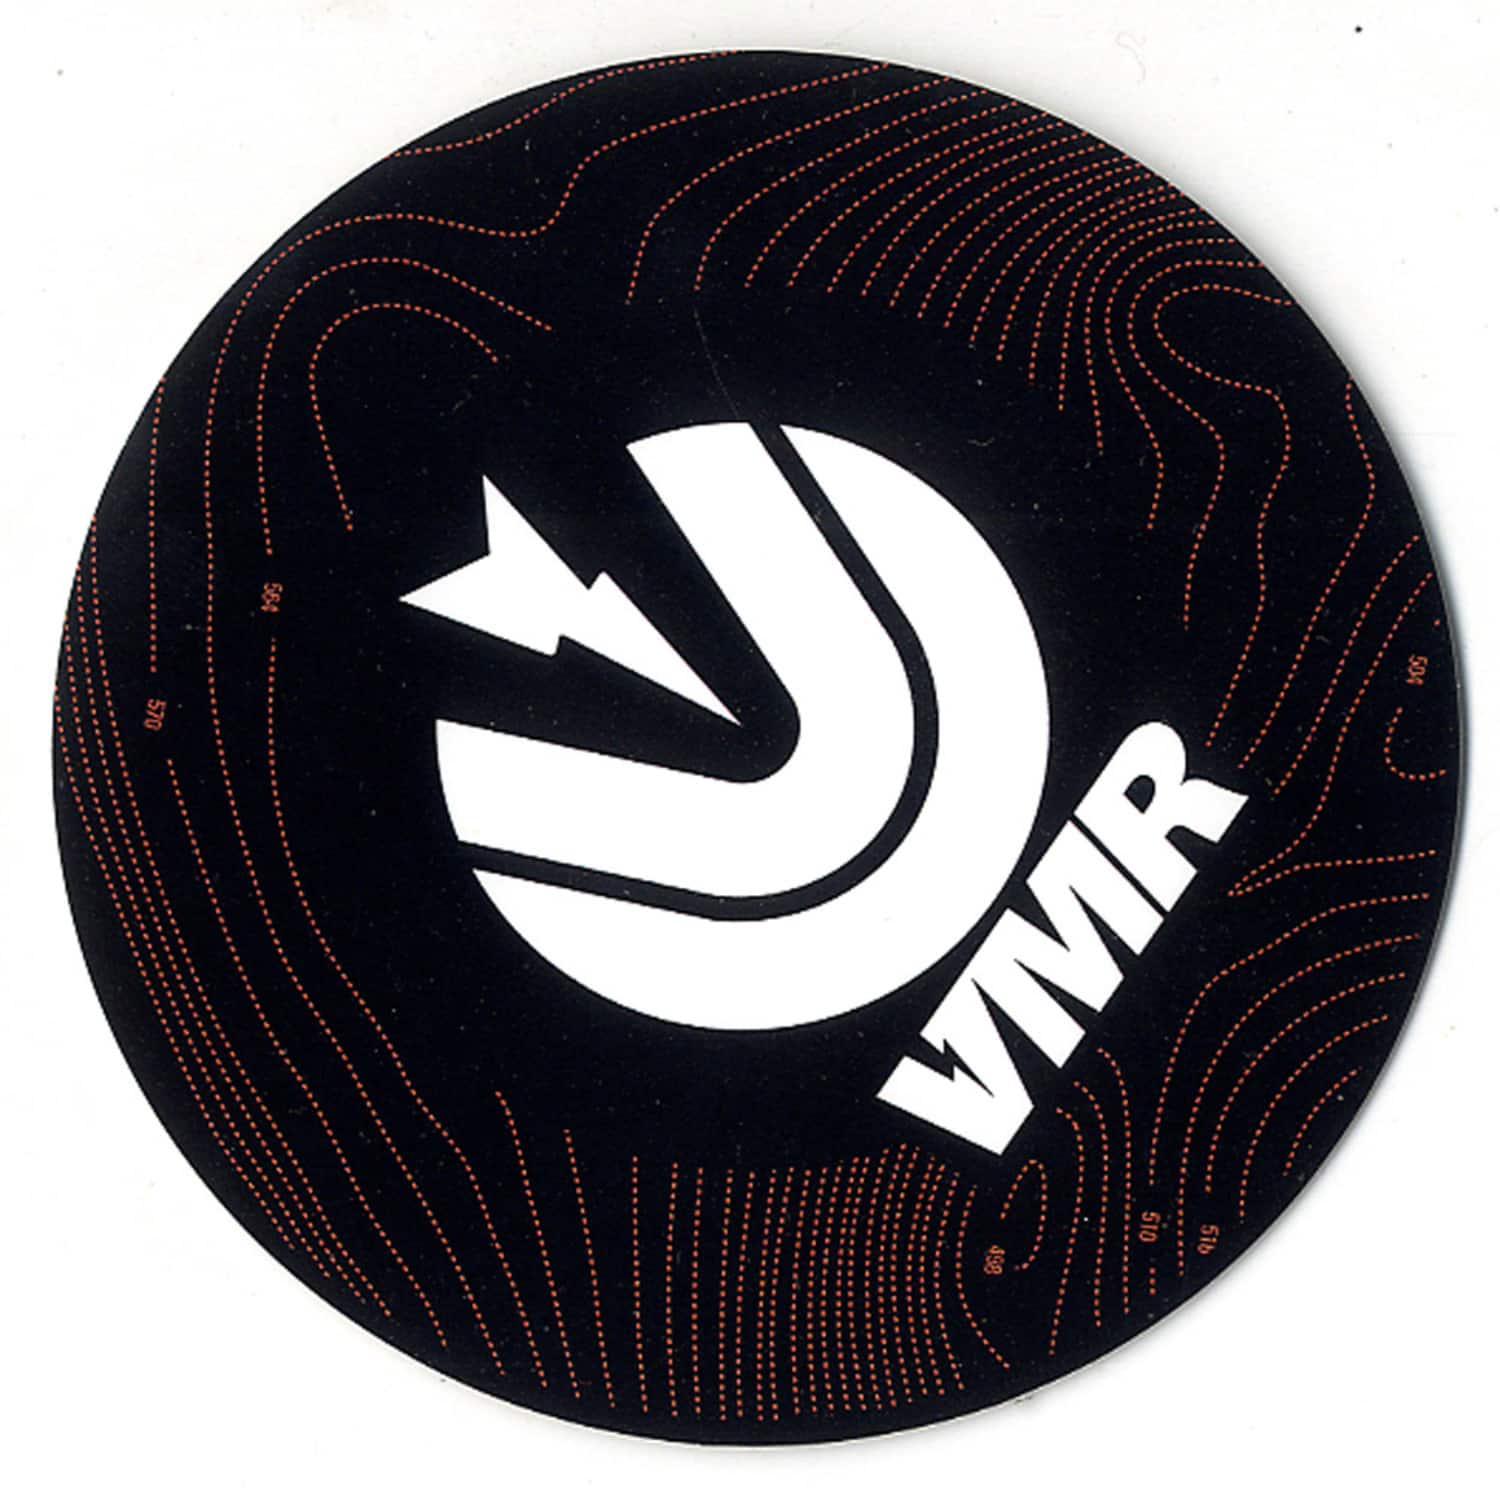 Sticker - VMR Records 